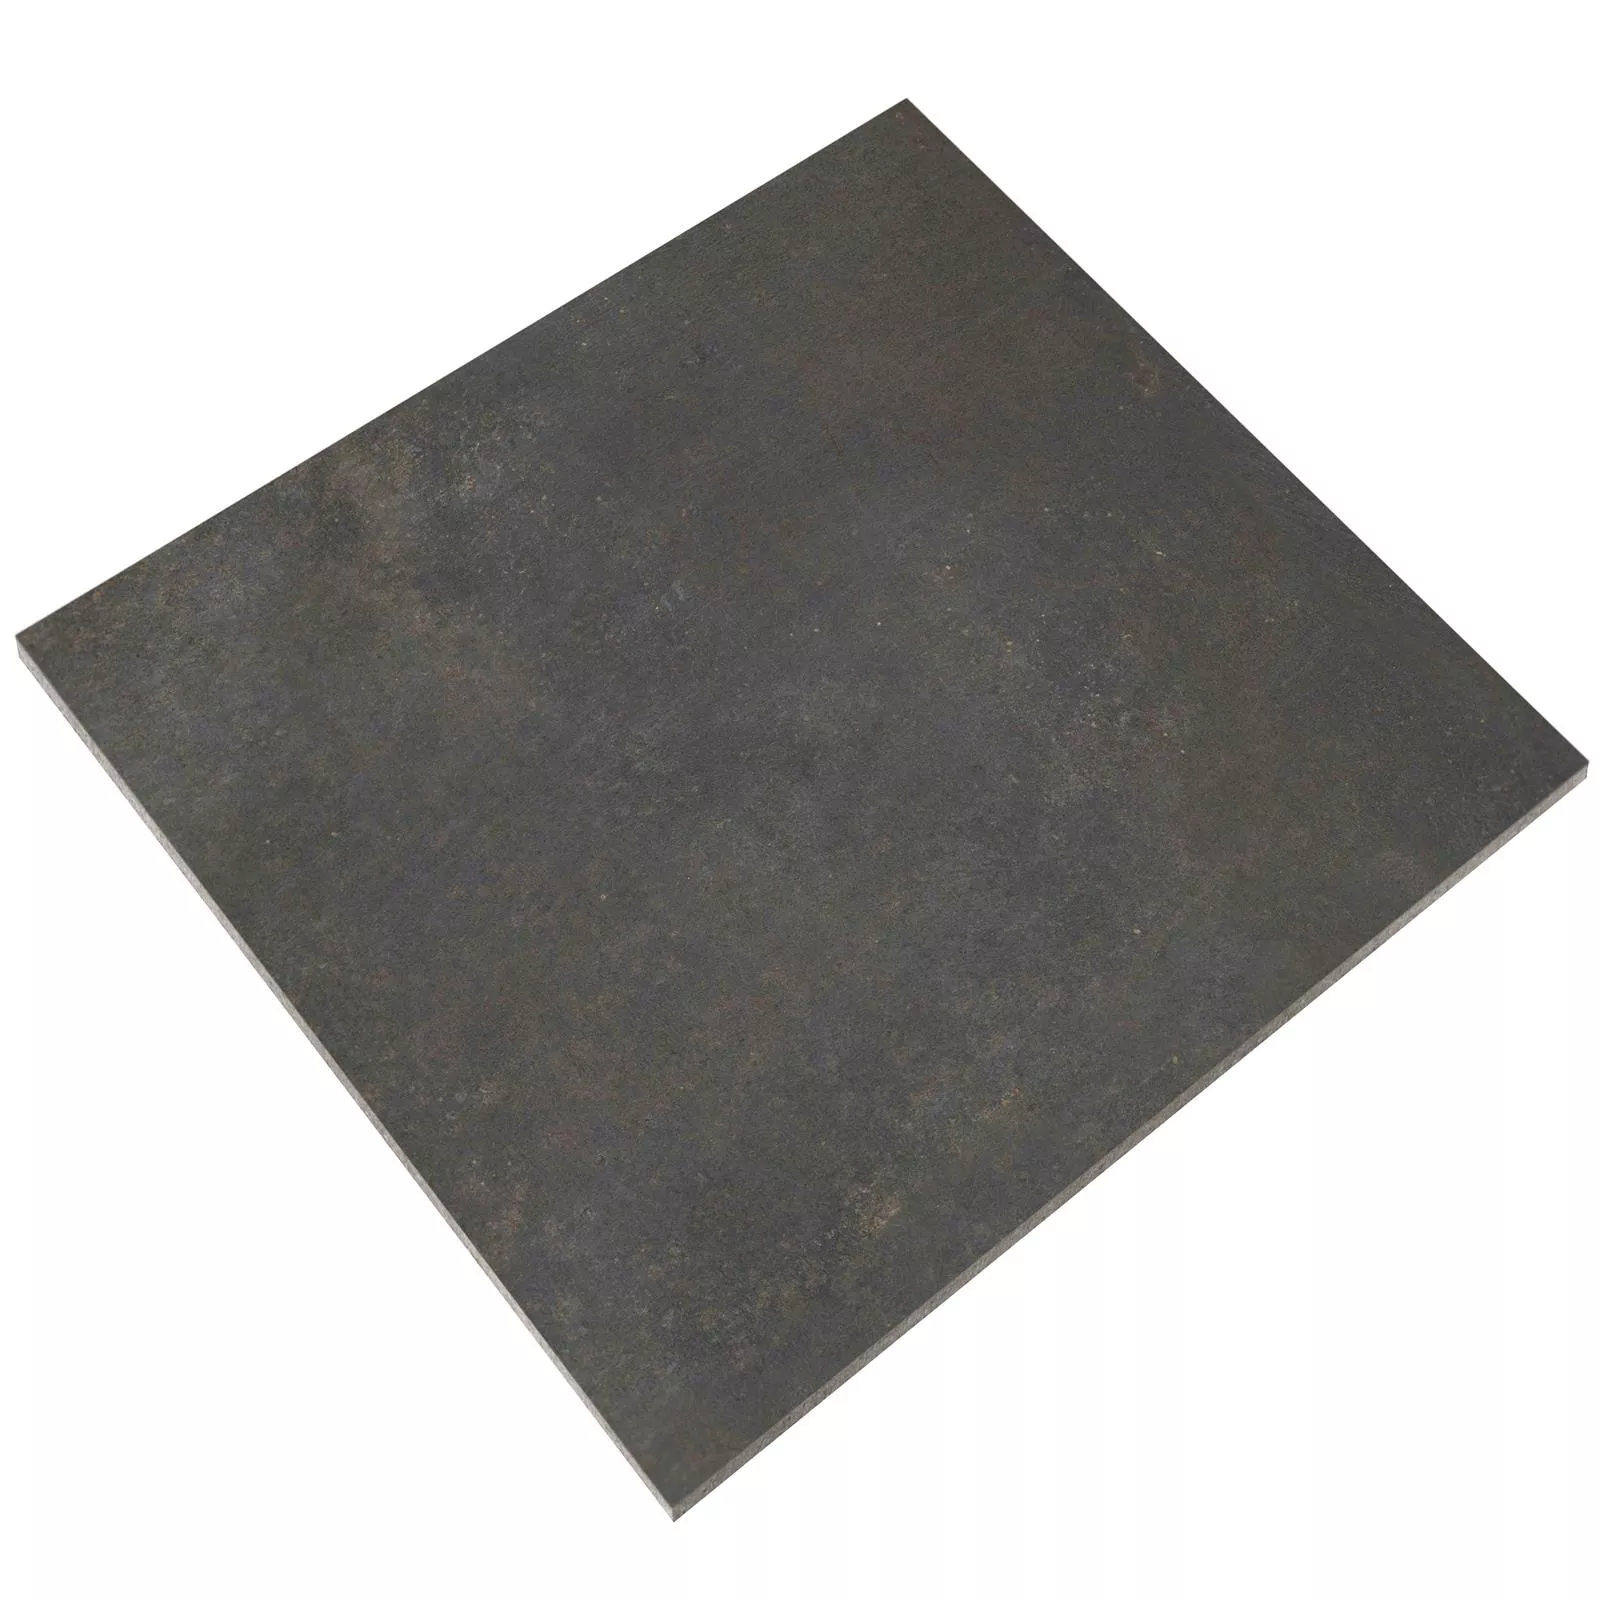 Floor Tiles Peaceway Anthracite 60x60cm